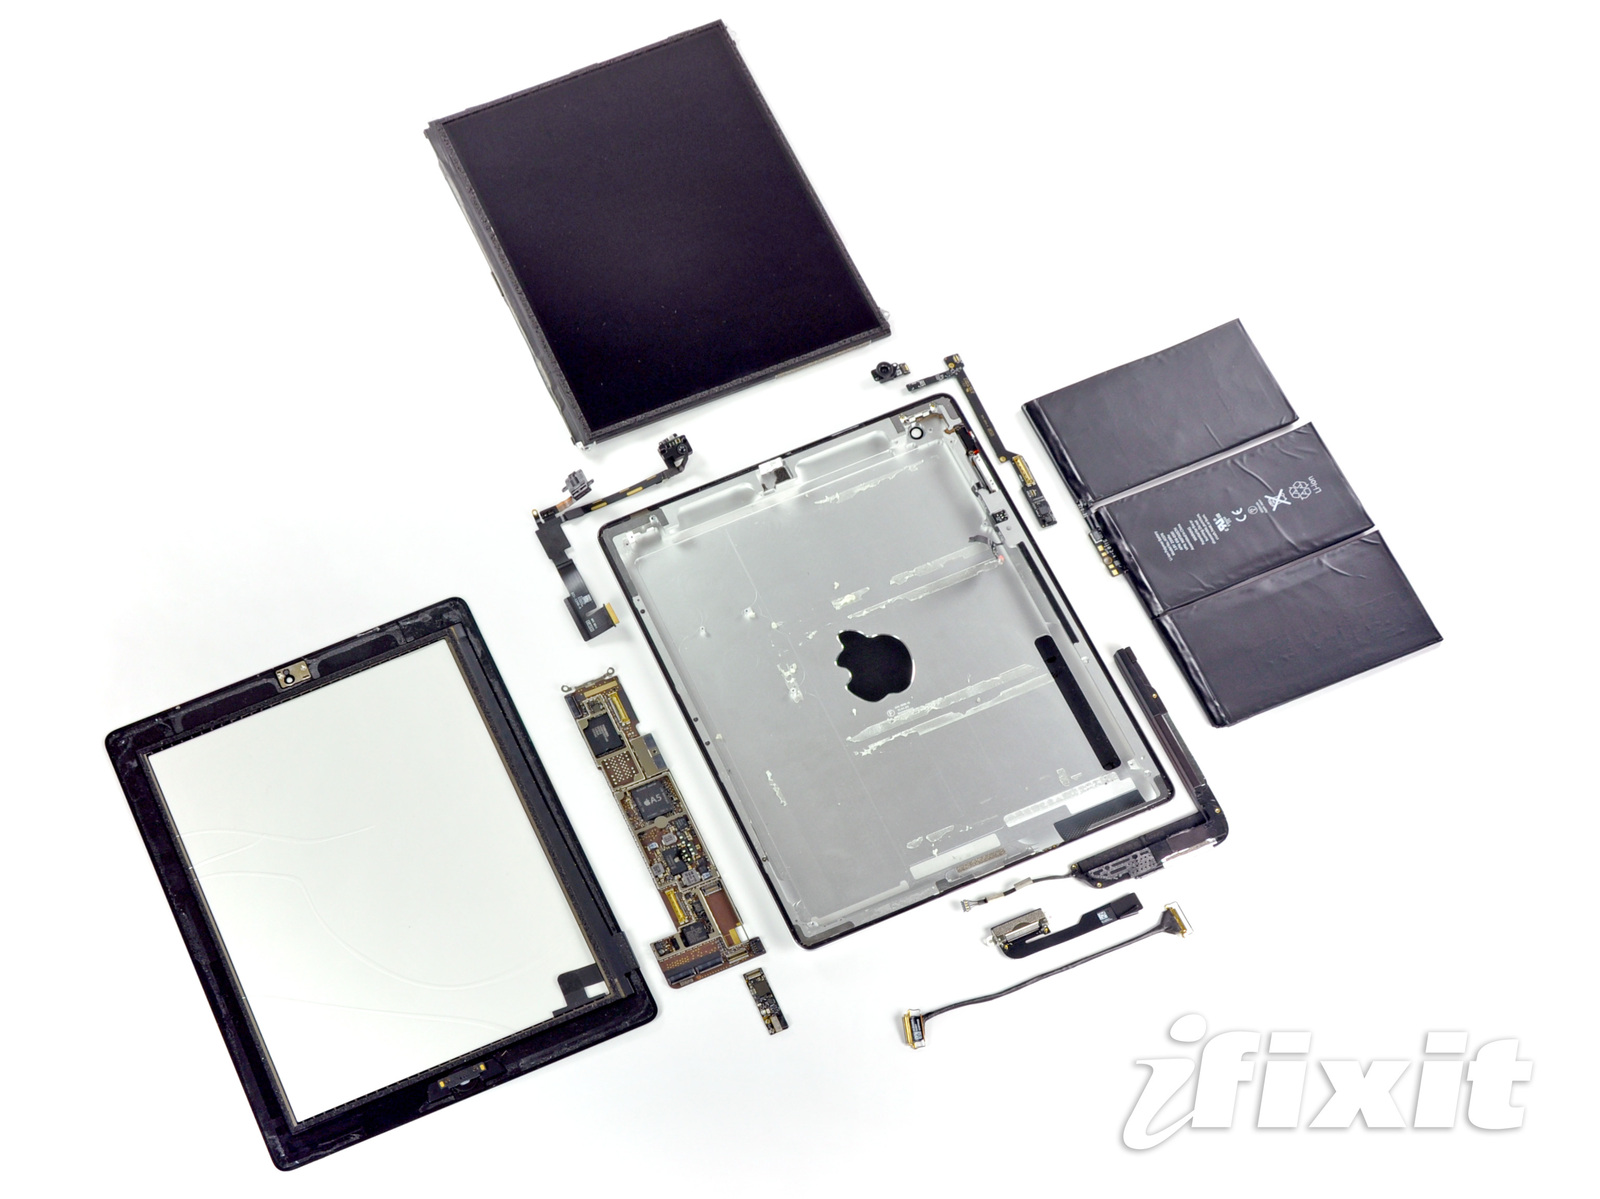 iPad 2 desmontado pela iFixit - Tcharam!